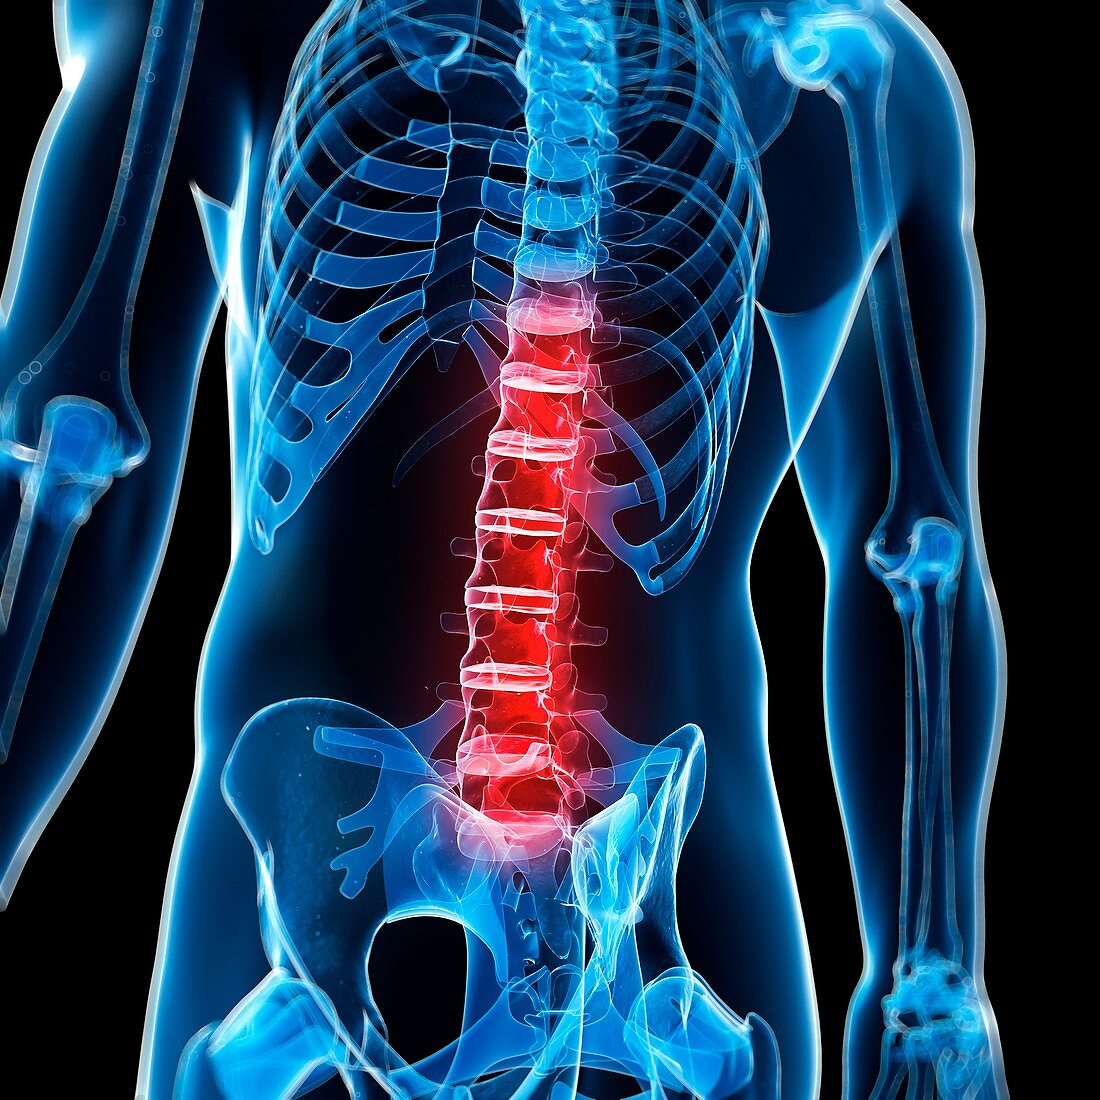 Human back pain,artwork